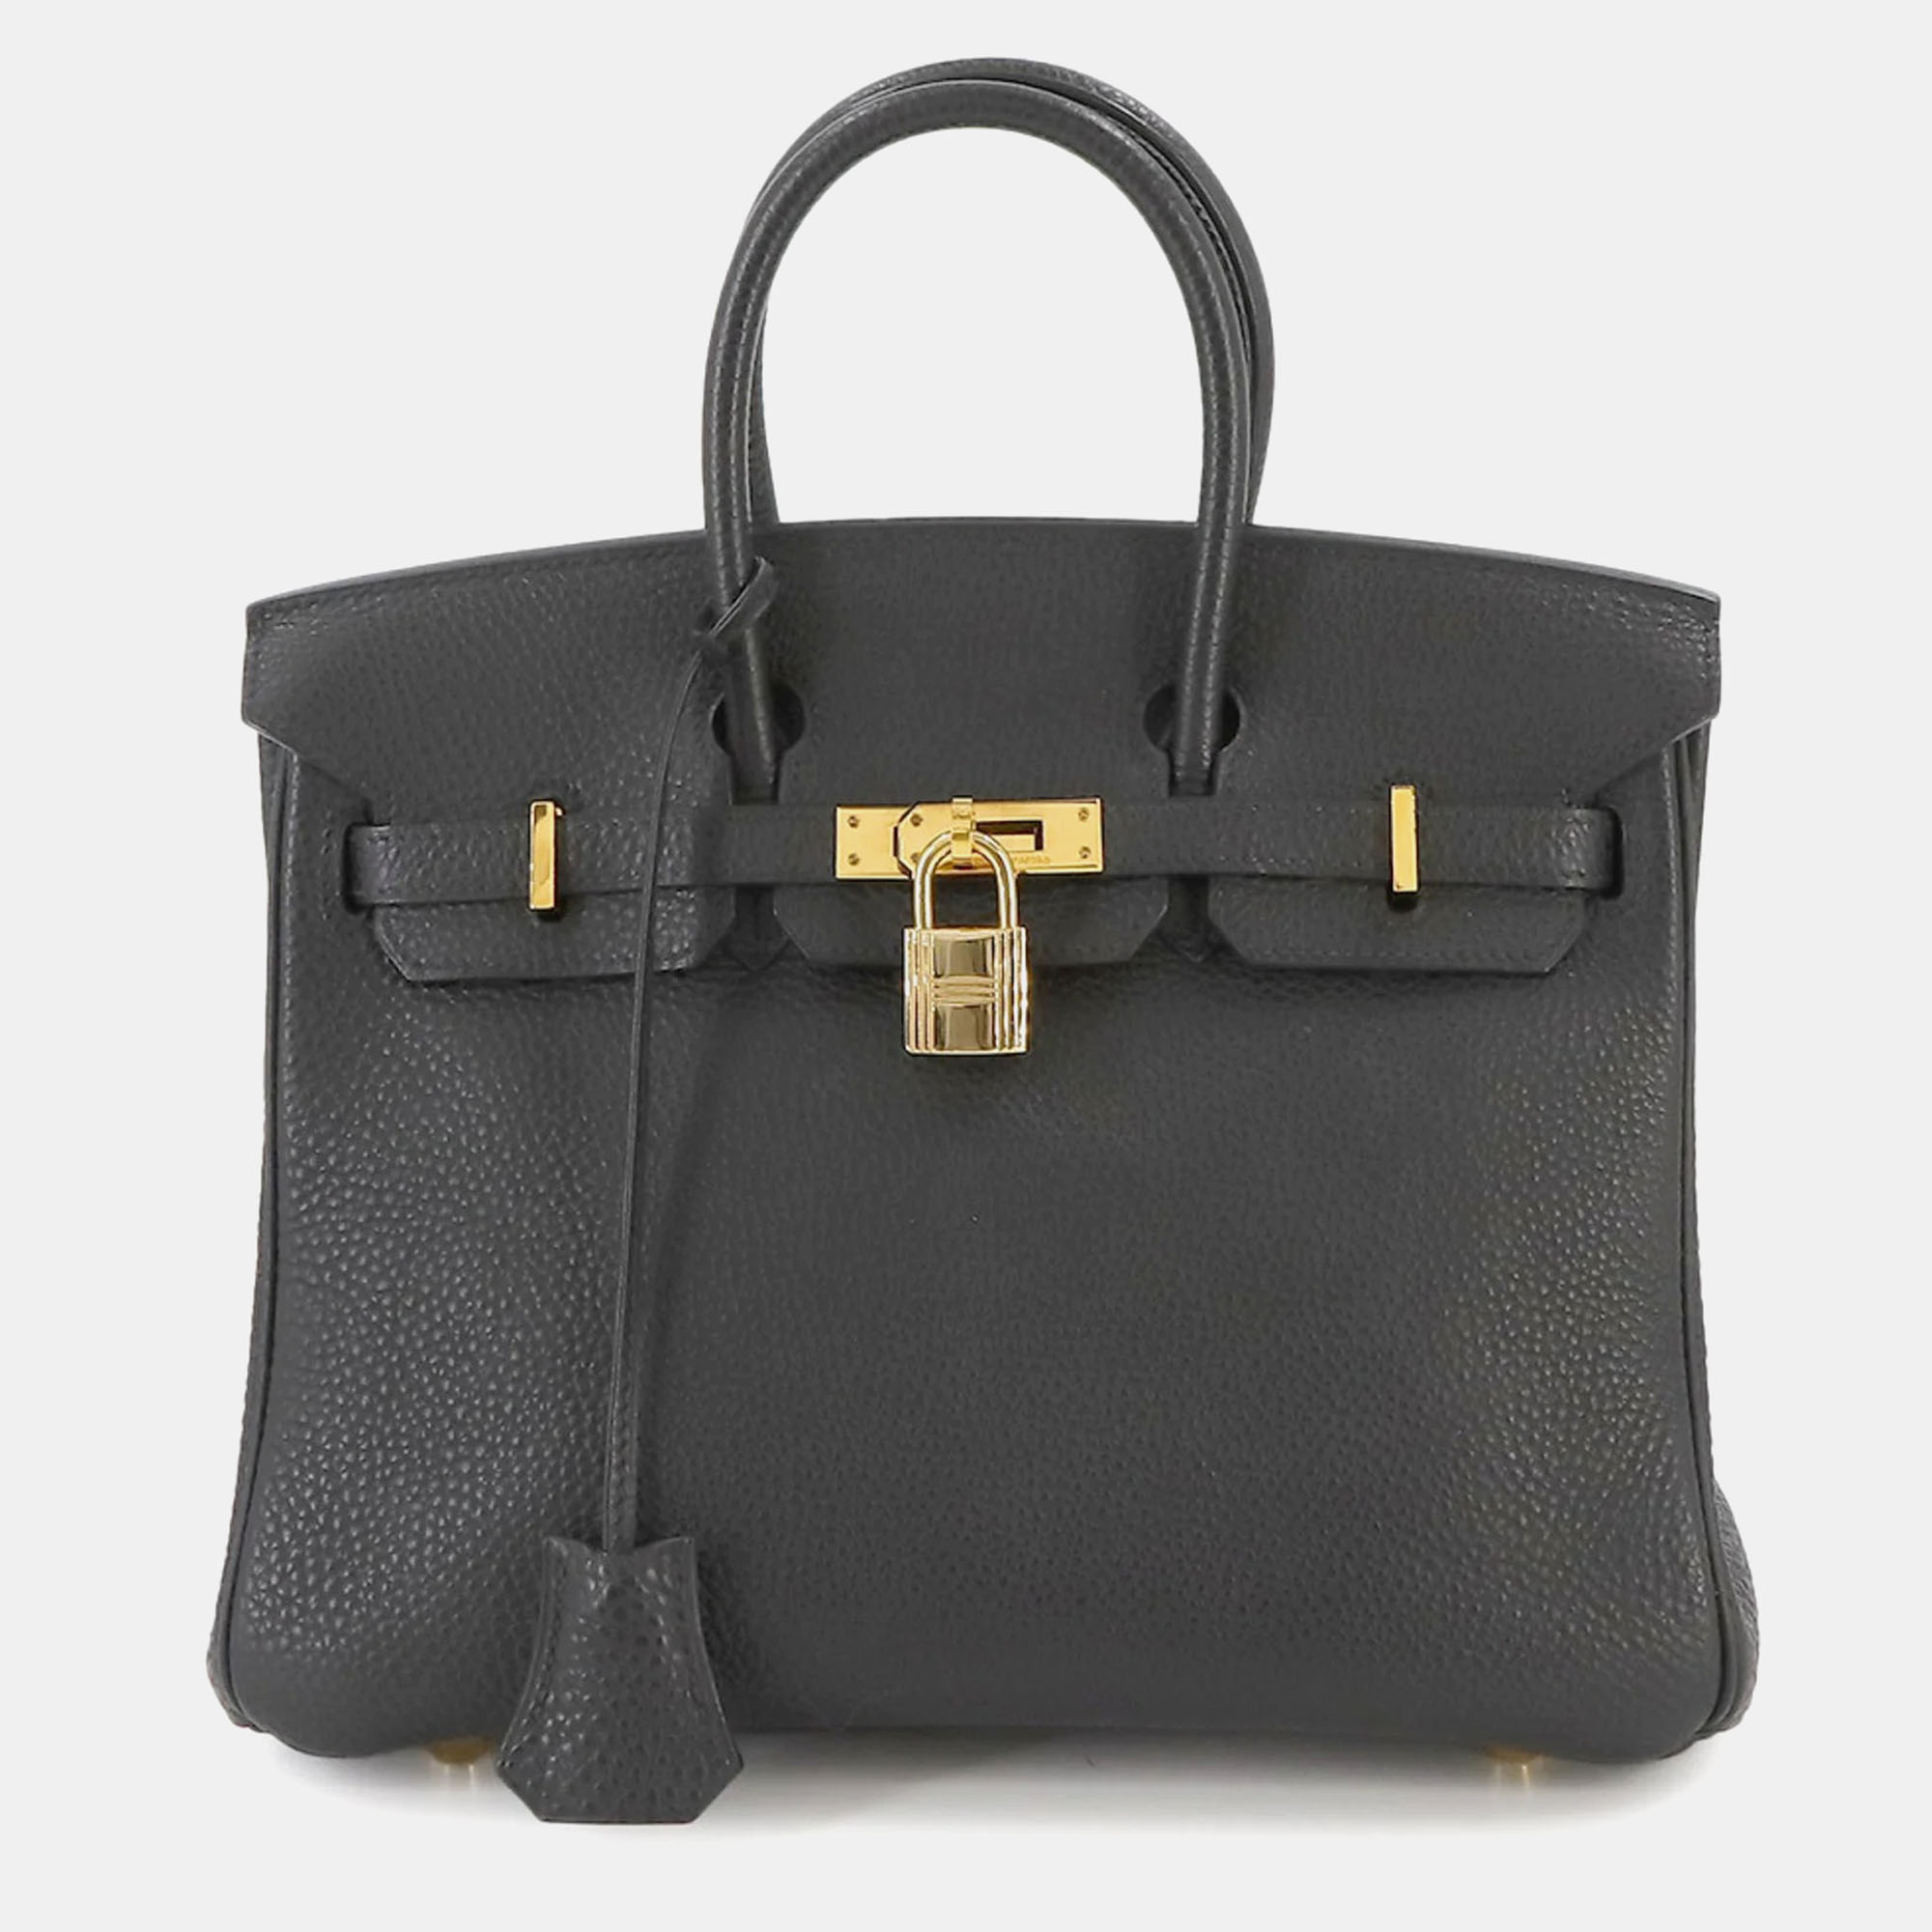 Hermes black togo birkin 25 handbag